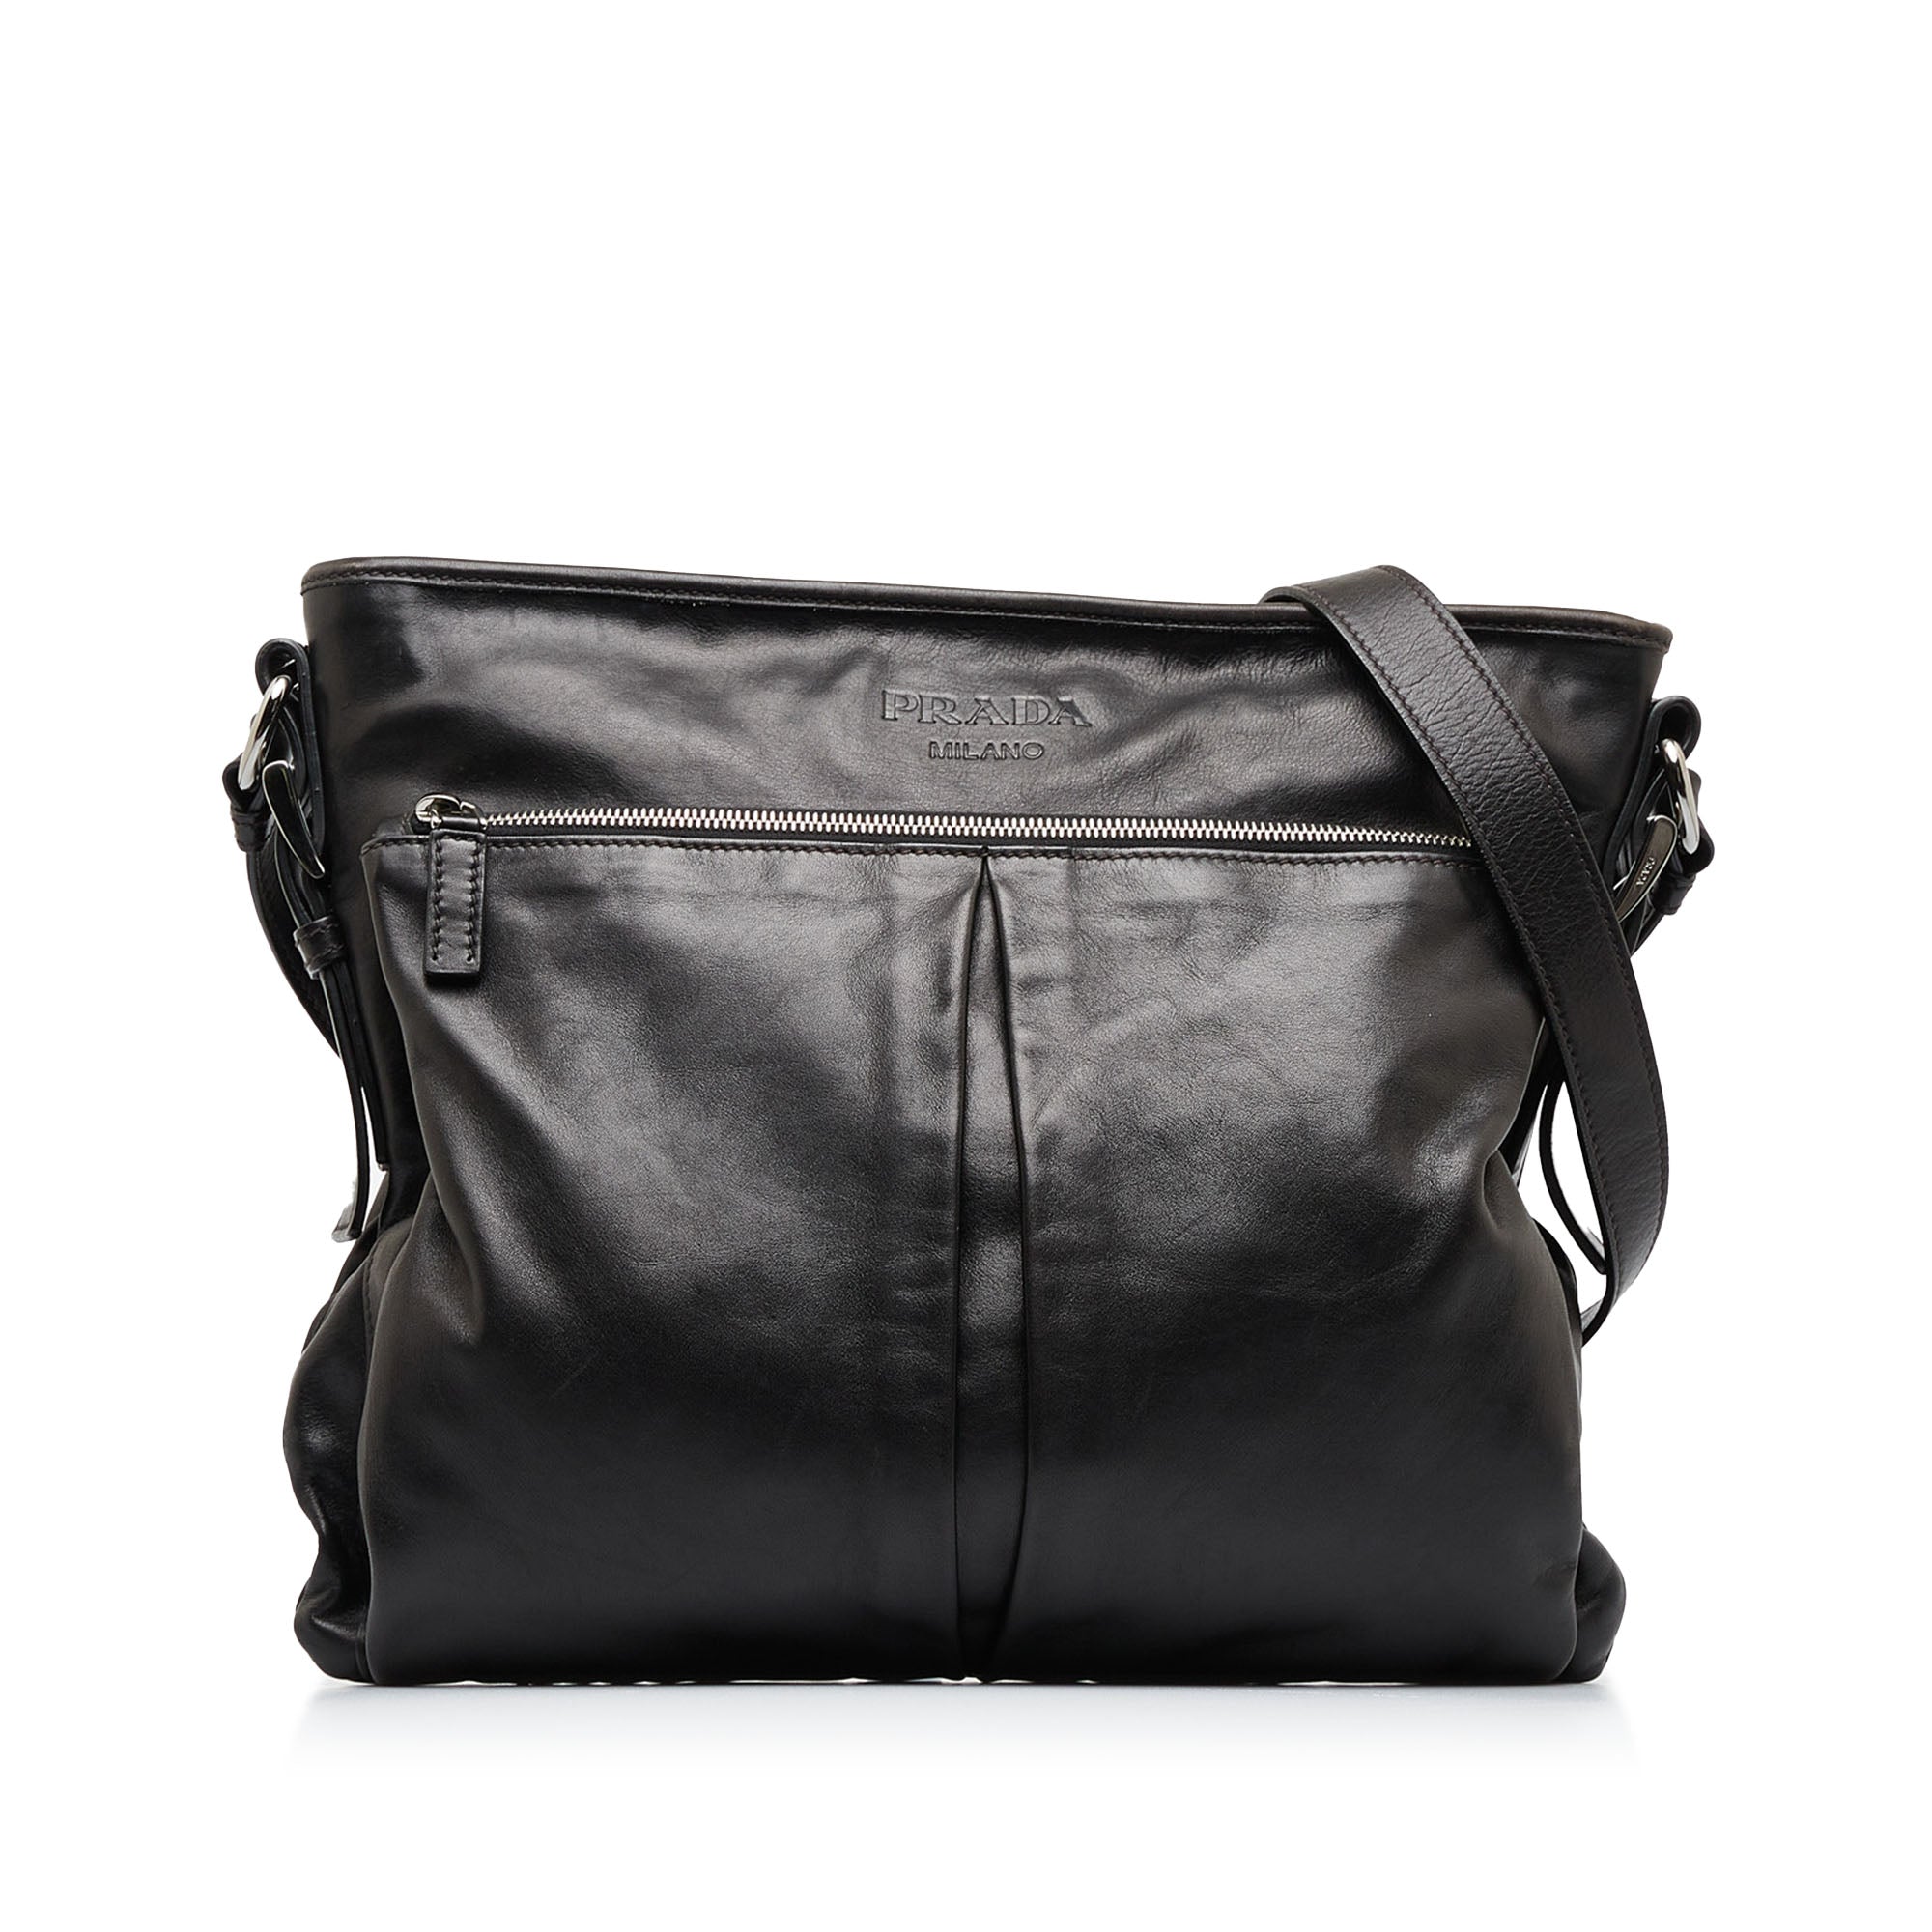 Saffiano leather crossbody bag